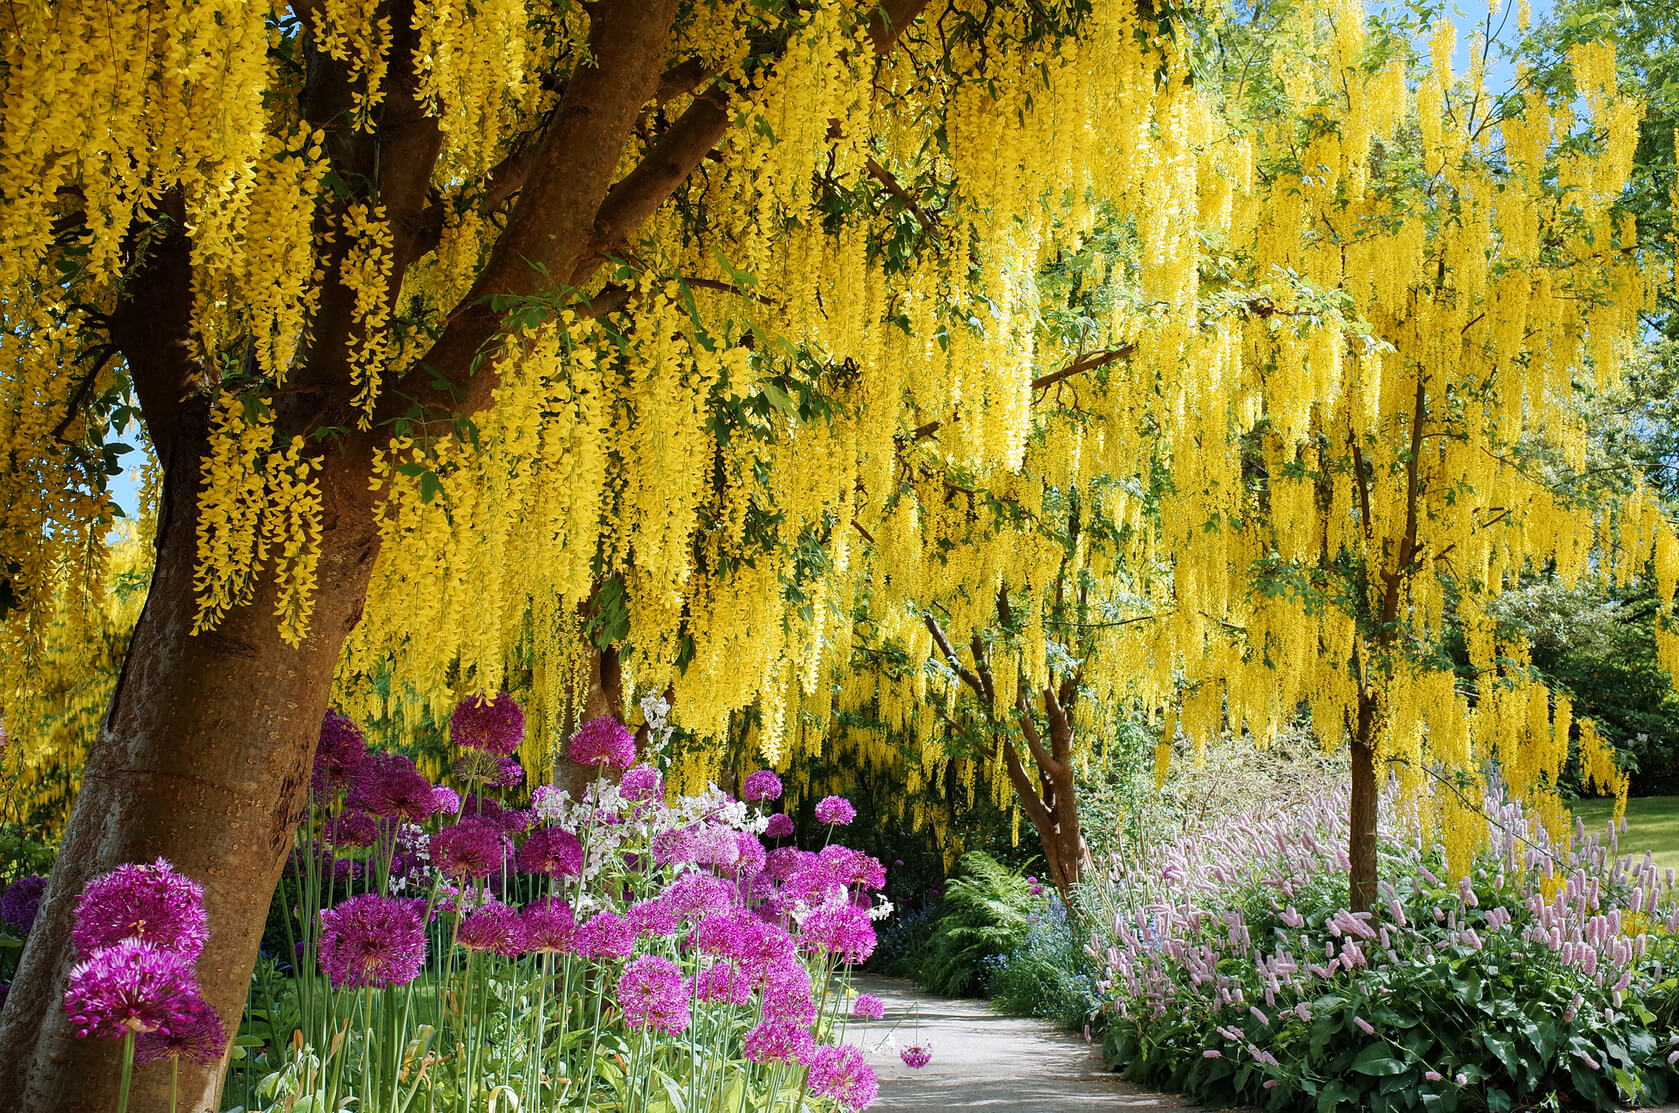 VanDusen Botanical Garden, Beautiful Laburnum (Golden Chain) blossoms in the mid of May at VanDusen Botanical Garden in Vancouver, BC Canada.